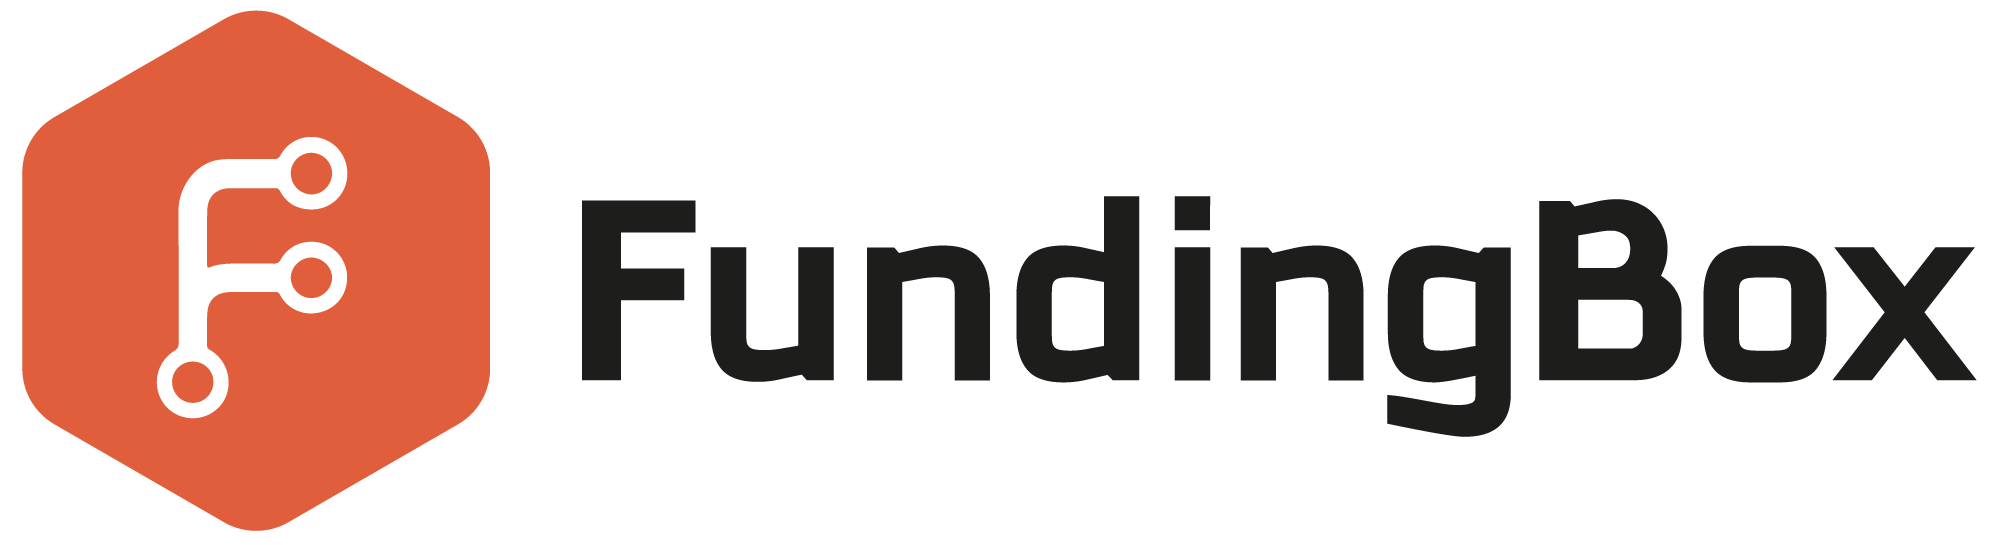 Logo wpisu FundingBox Accelerator Sp. z o.o.